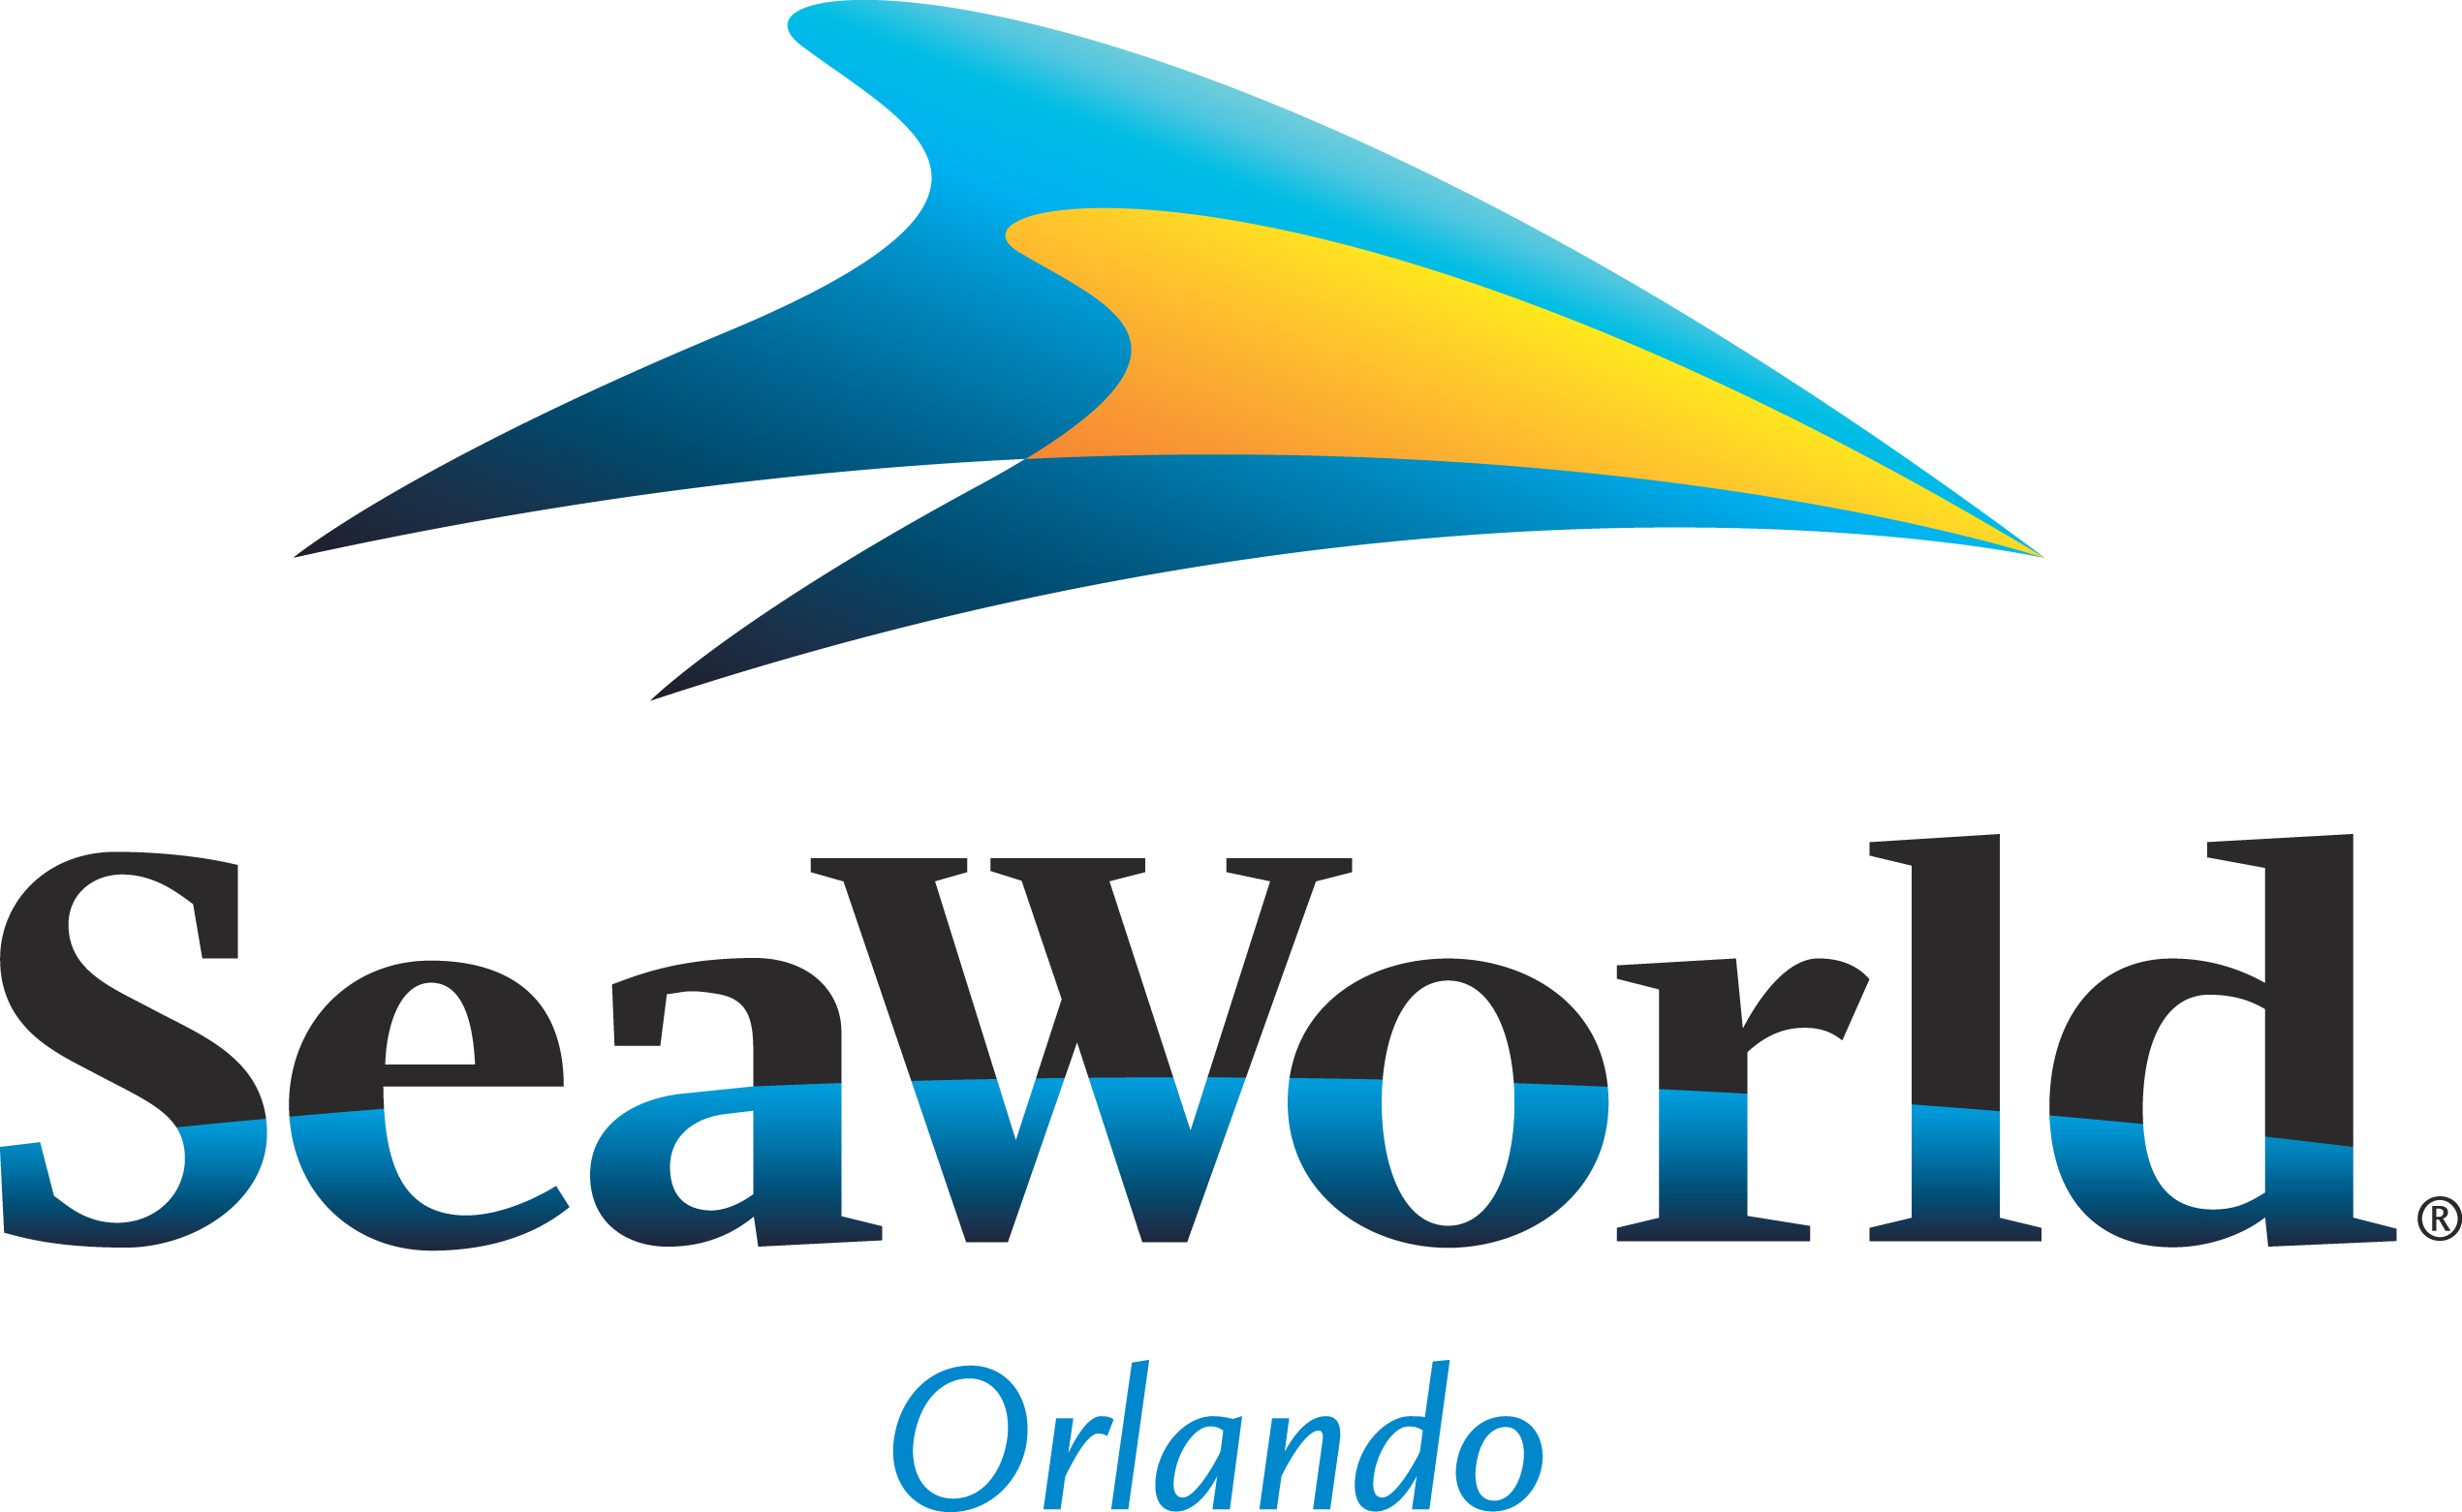 Sea World Orlando logo. Get seaworld group discount tickets.